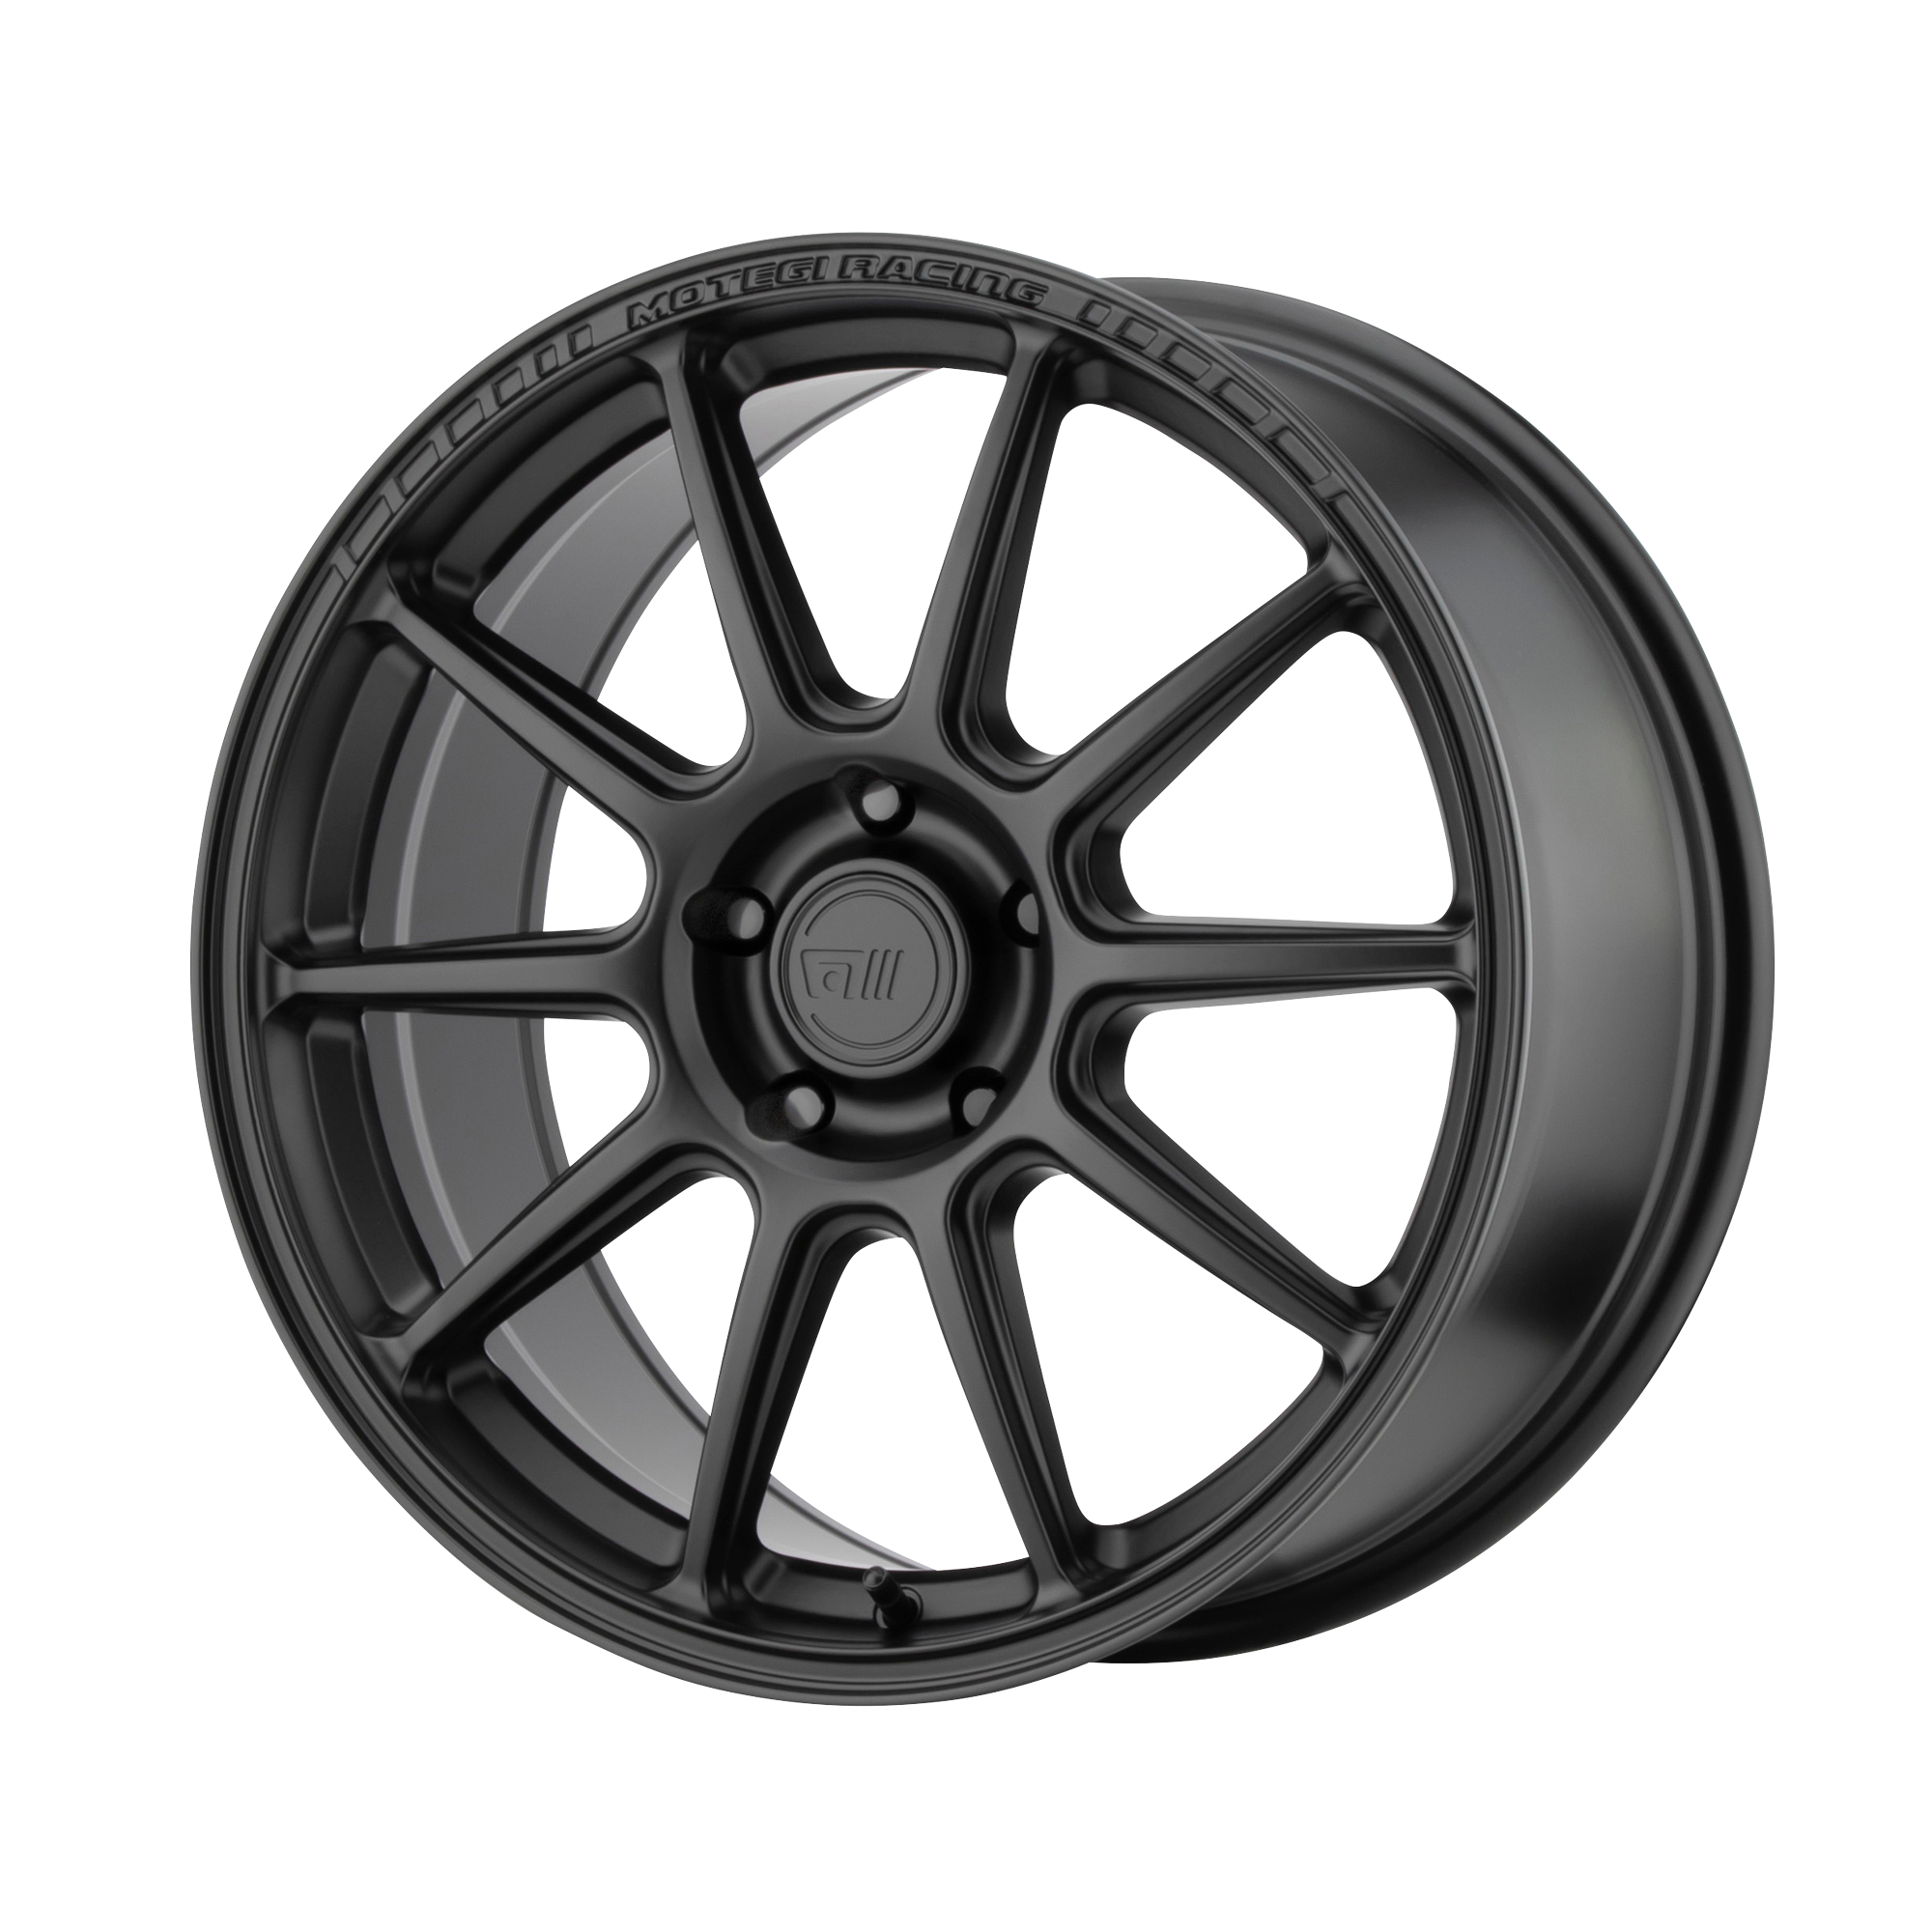 MR140 18x8.5 5x108.00 SATIN BLACK (45 mm) - Tires and Engine Performance